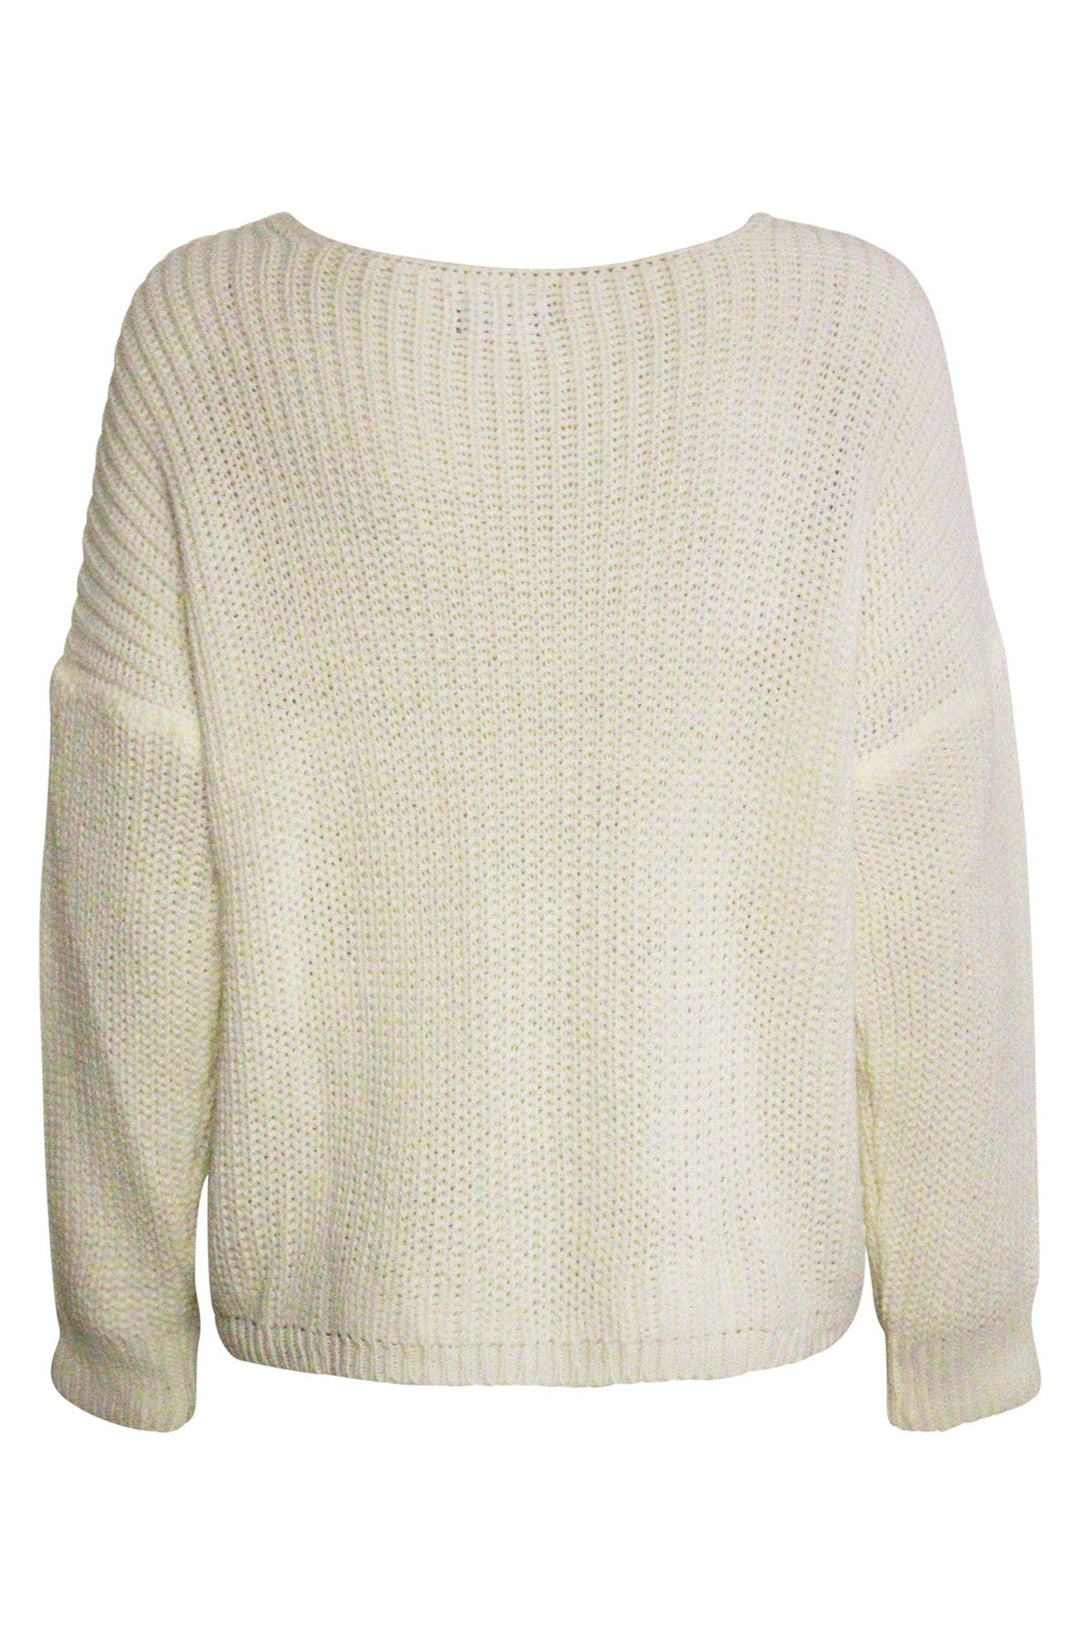 Naya 'Ooh La La' Knitted Jumper Sweater Top-Ivory